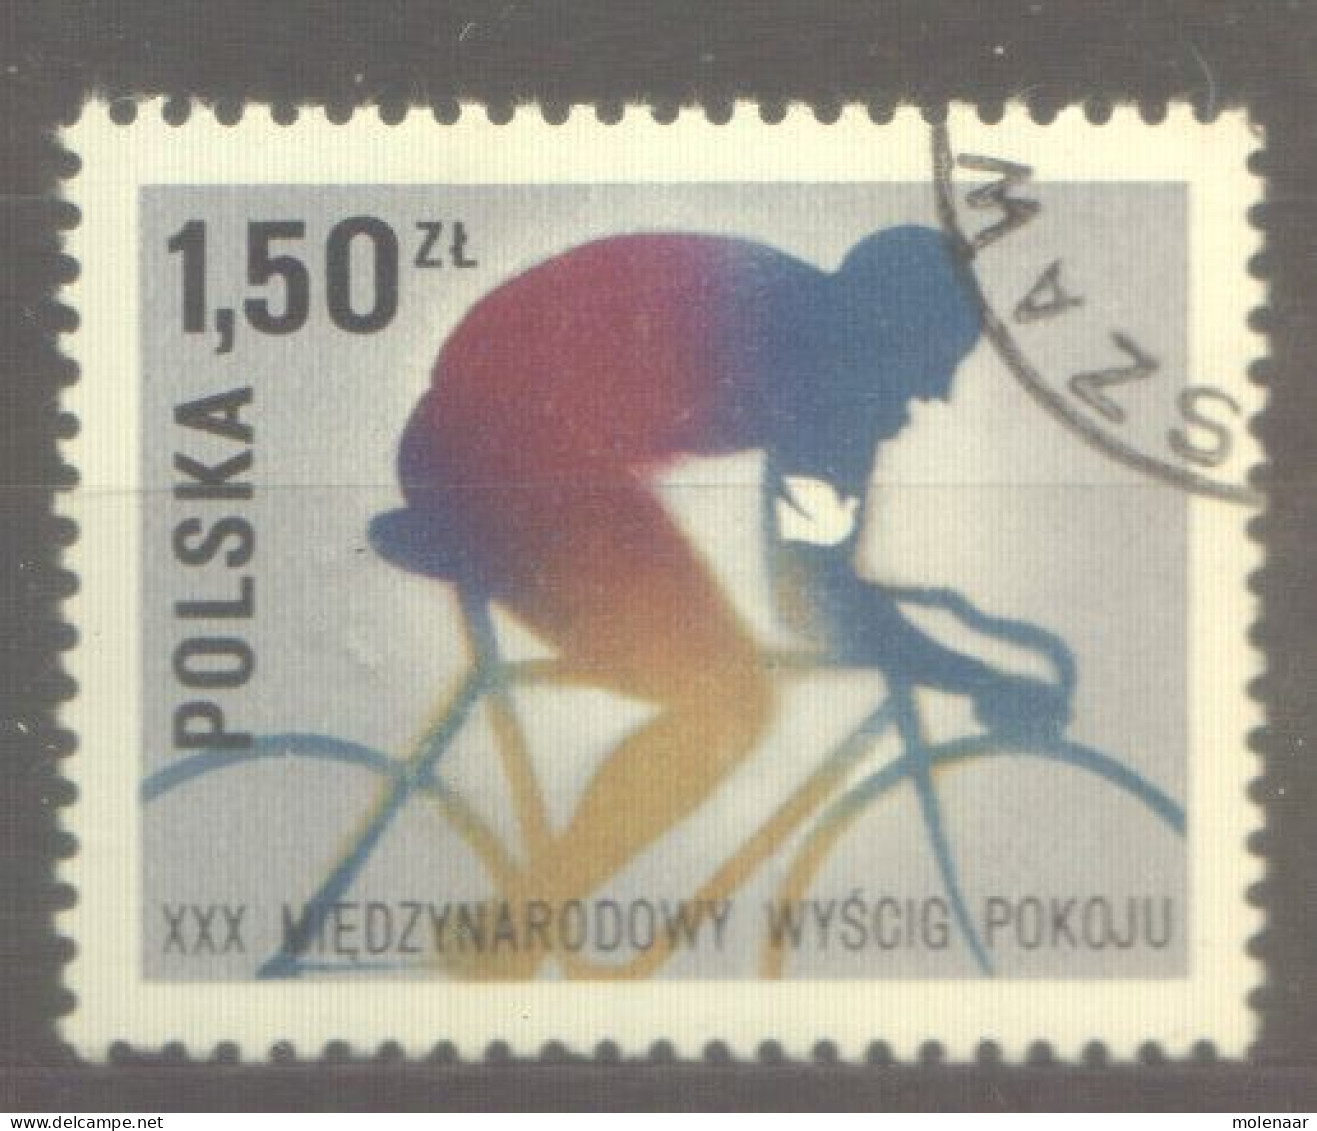 Postzegels > Europa > Polen > 1944-.... Republiek > 1971-80 > Gebruikt No. 2501 (24144) - Gebraucht